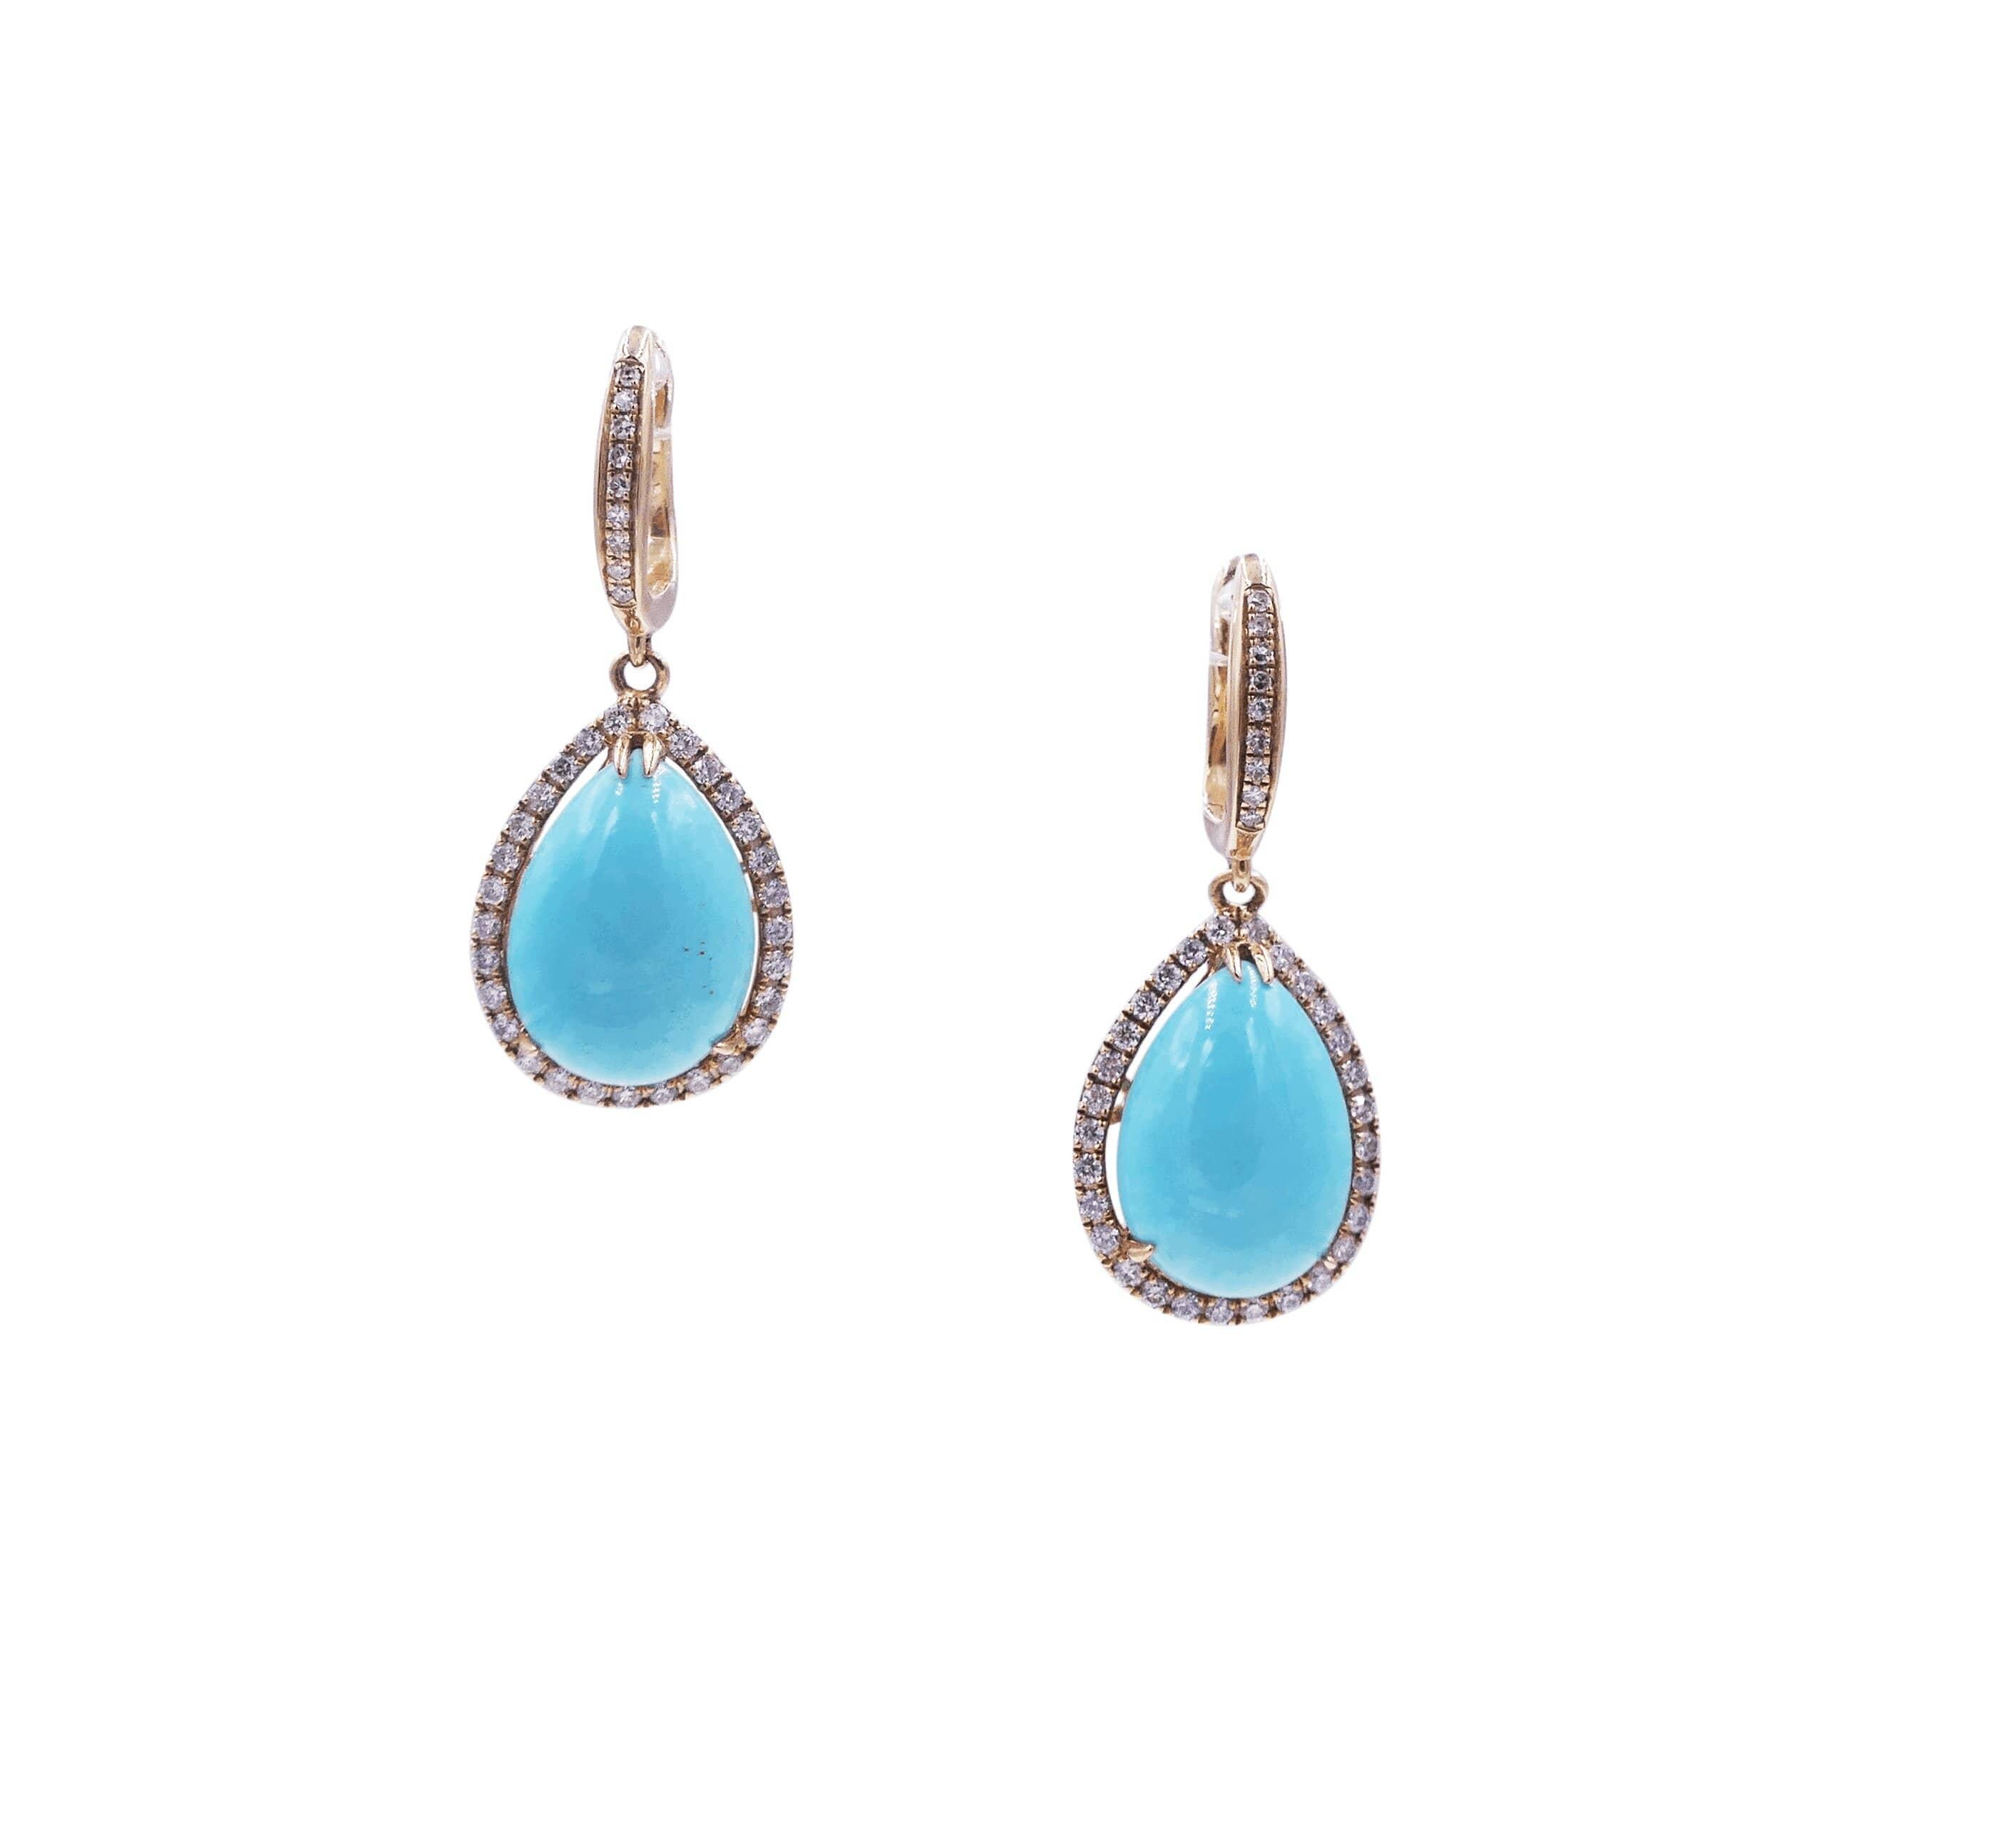 14k gold turquoise earrings